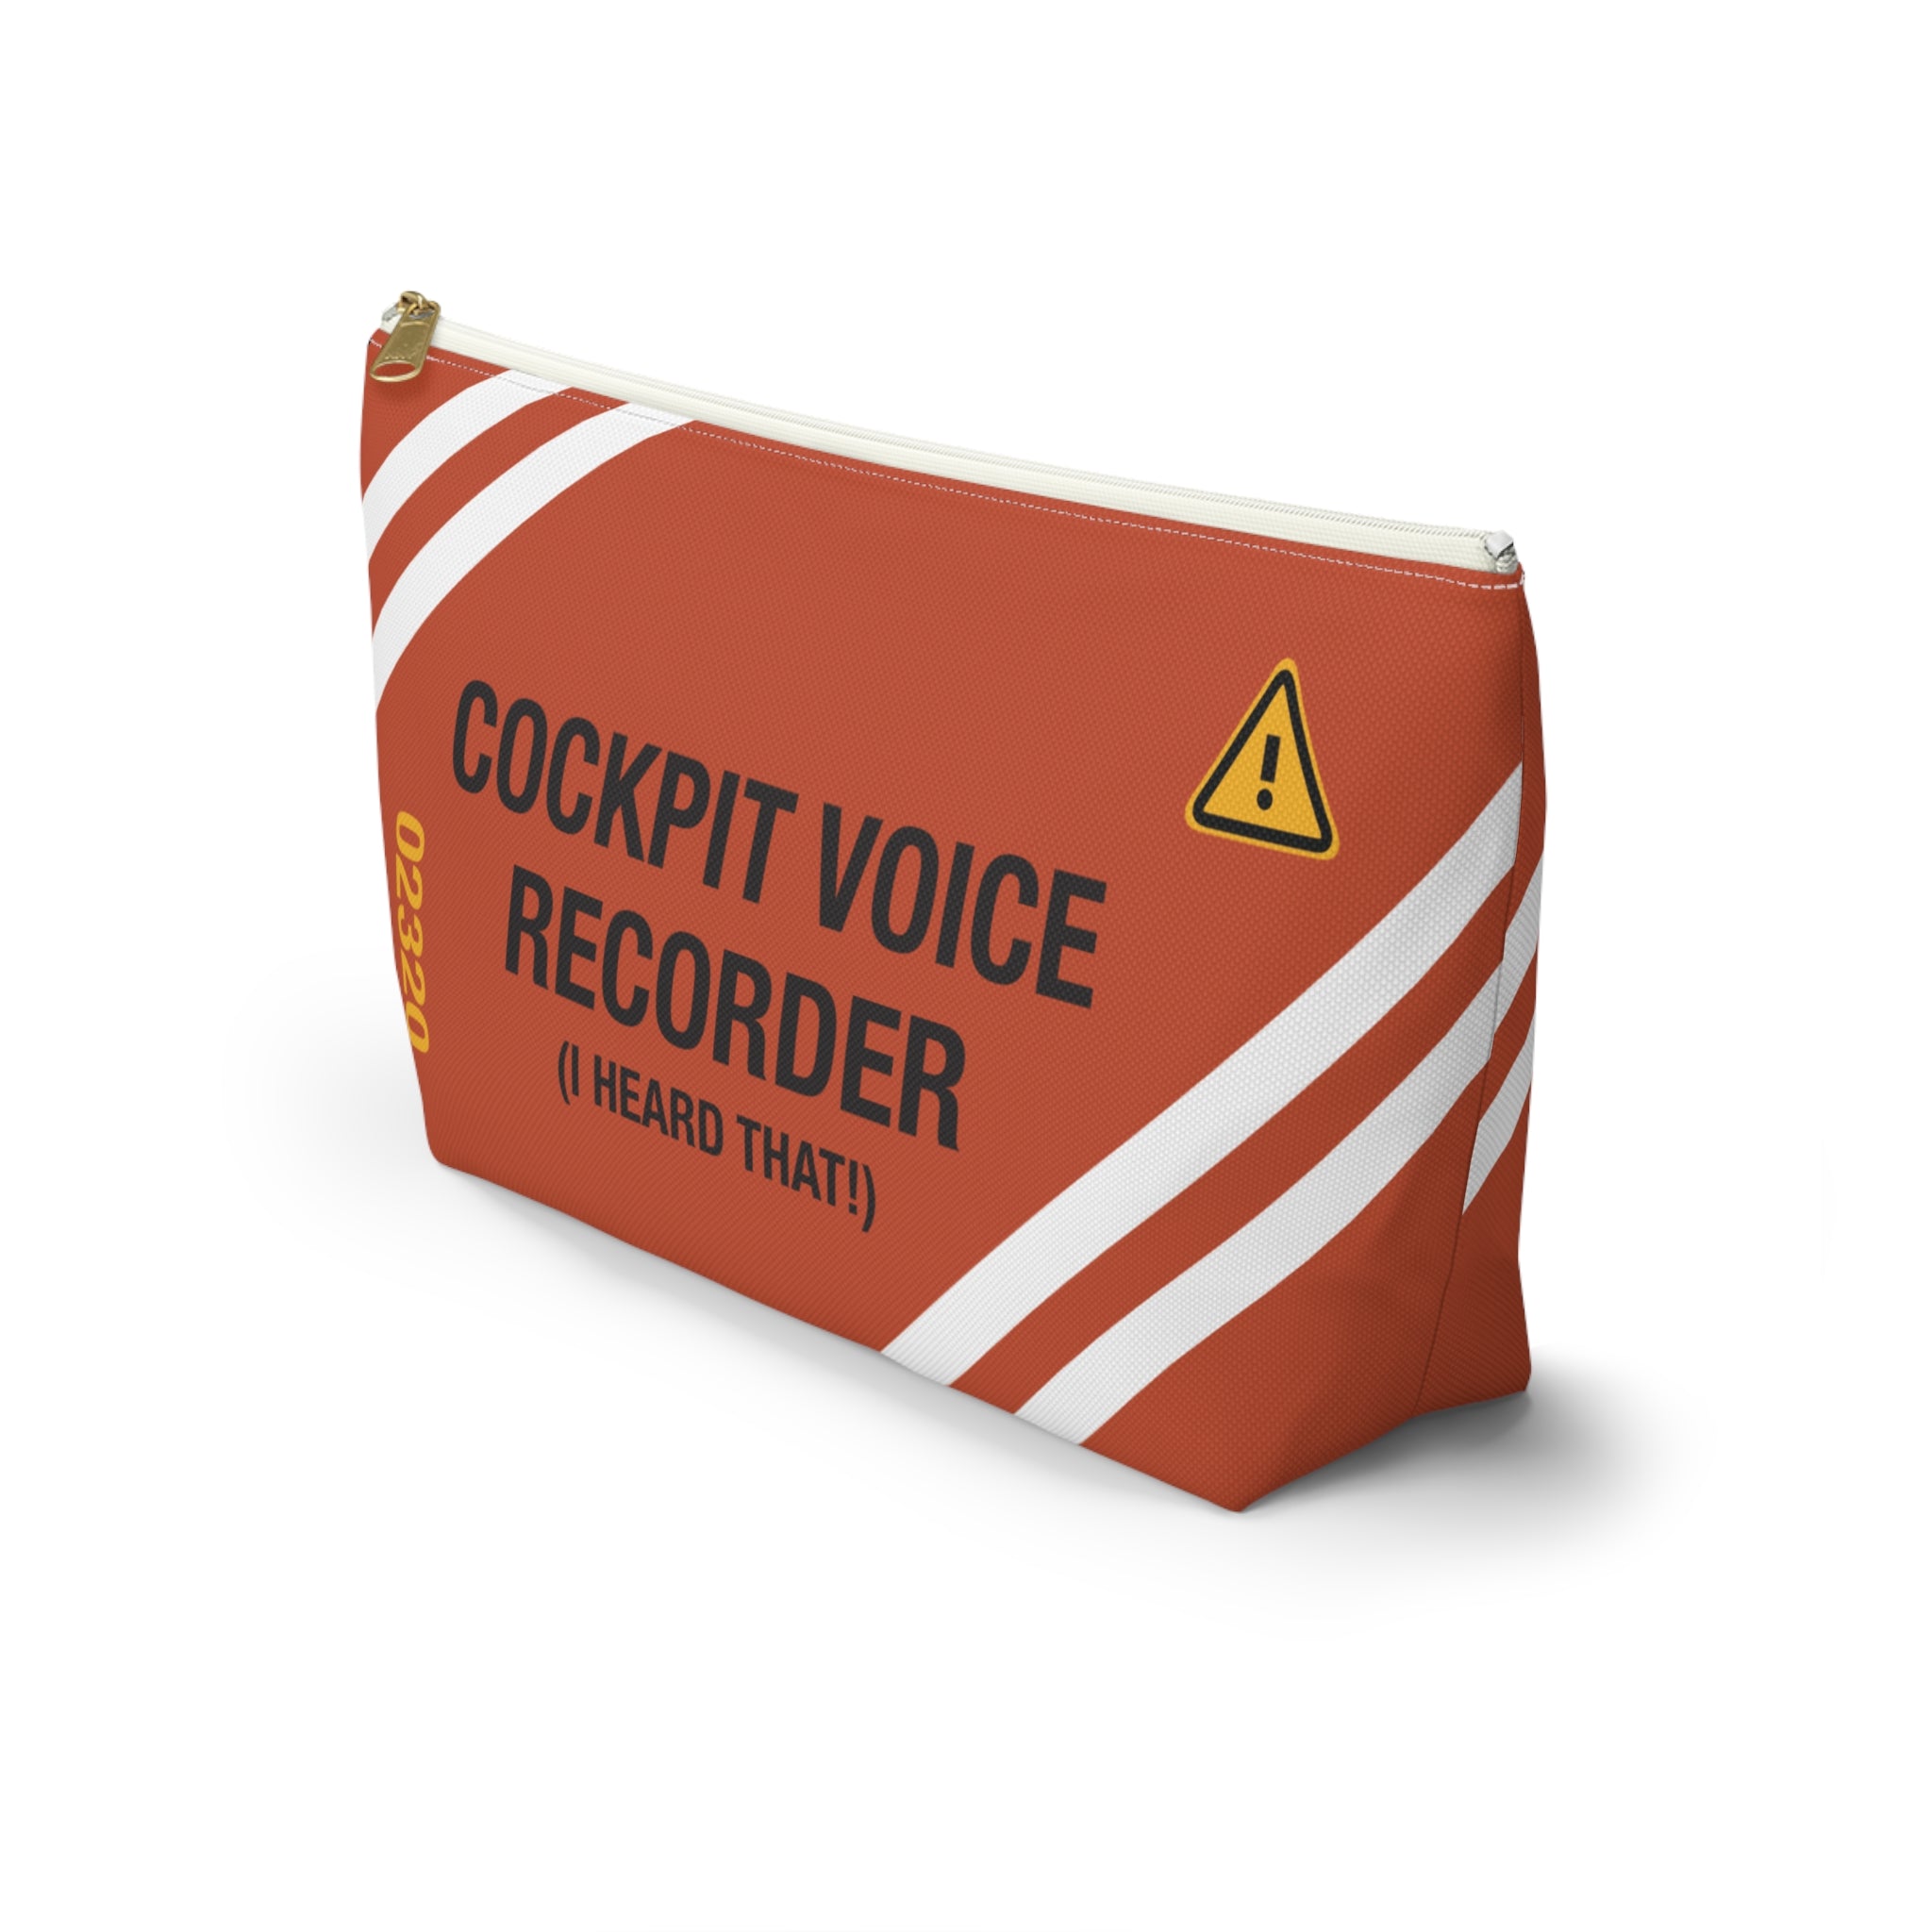 Cockpit Voice Recorder T-Bottom Accessory Pouch